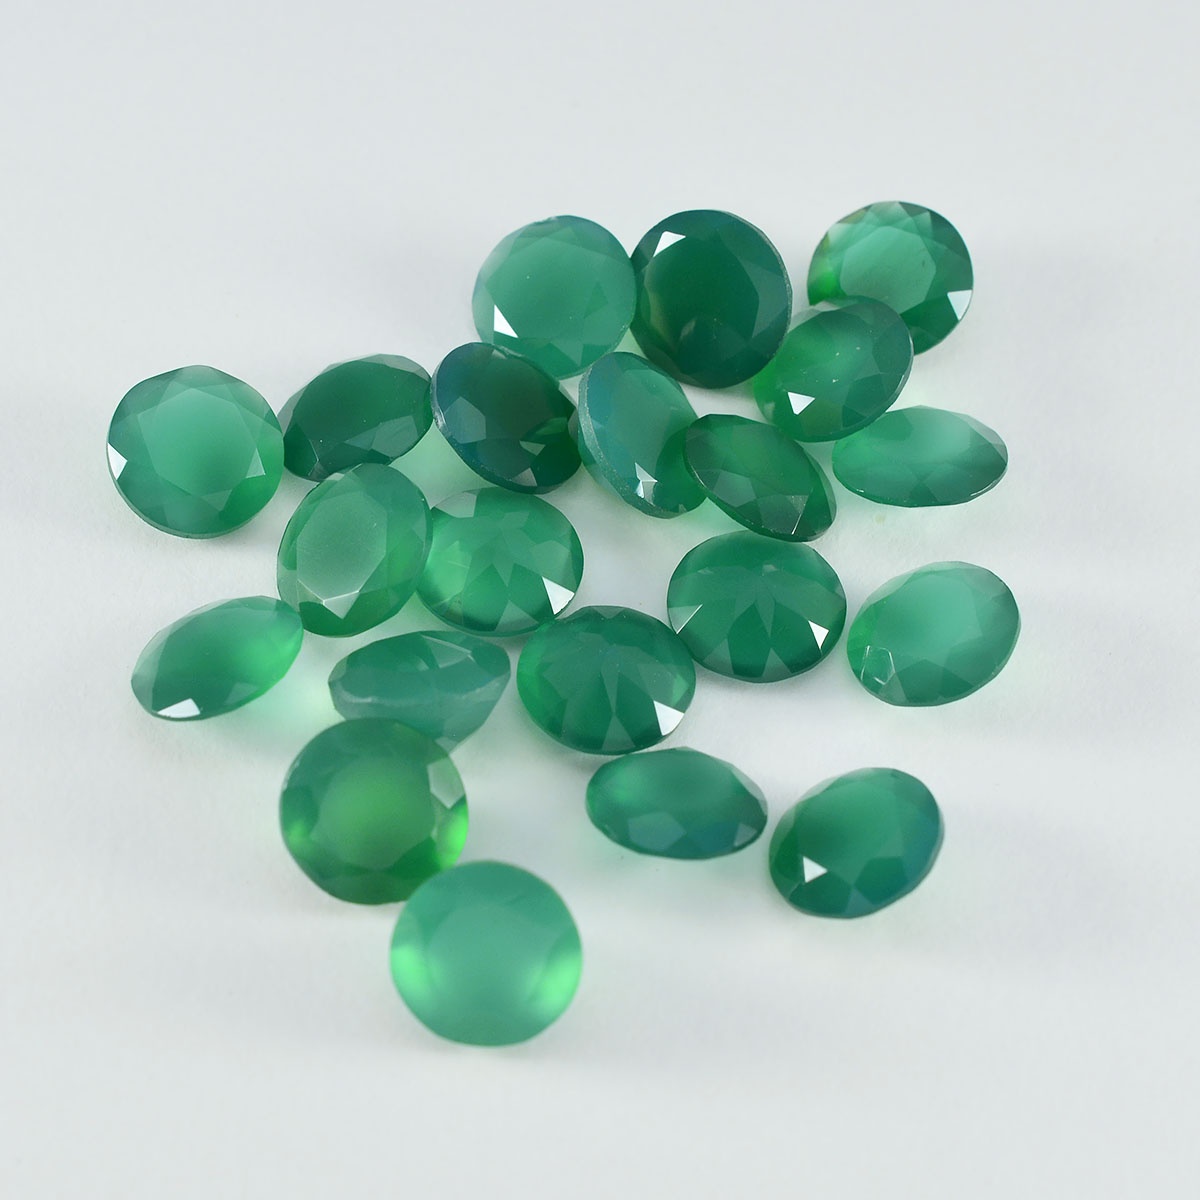 riyogems 1pc ナチュラル グリーン オニキス ファセット 5x5 mm ラウンド形状 a1 品質の宝石